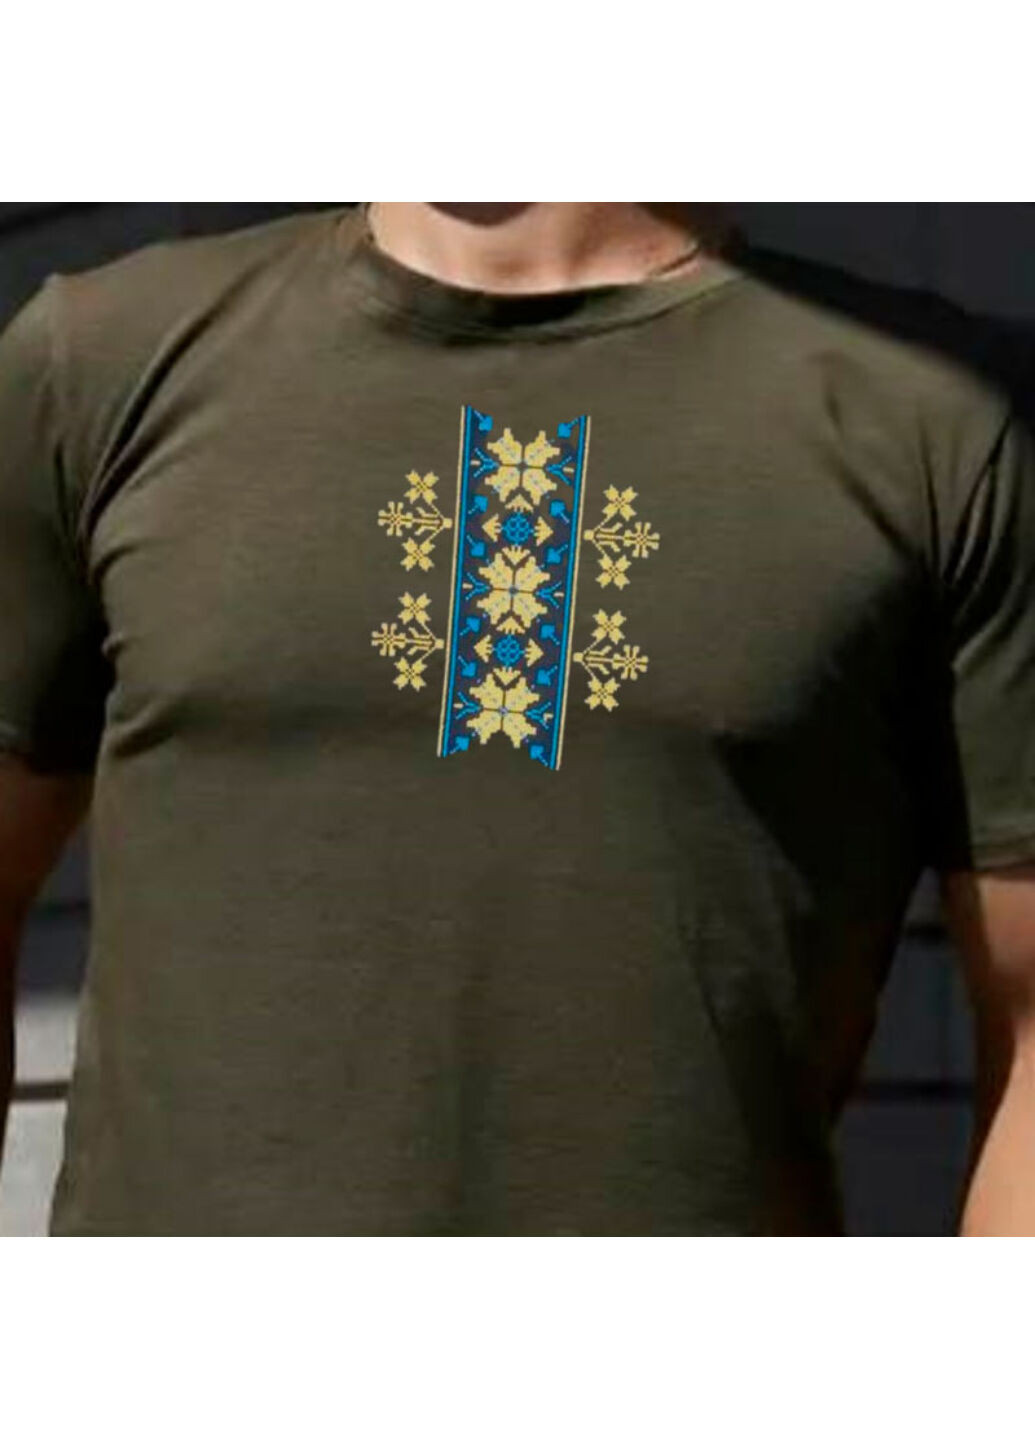 Хаки (оливковая) футболка з вишивкою етно 01-3 мужская хаки l No Brand